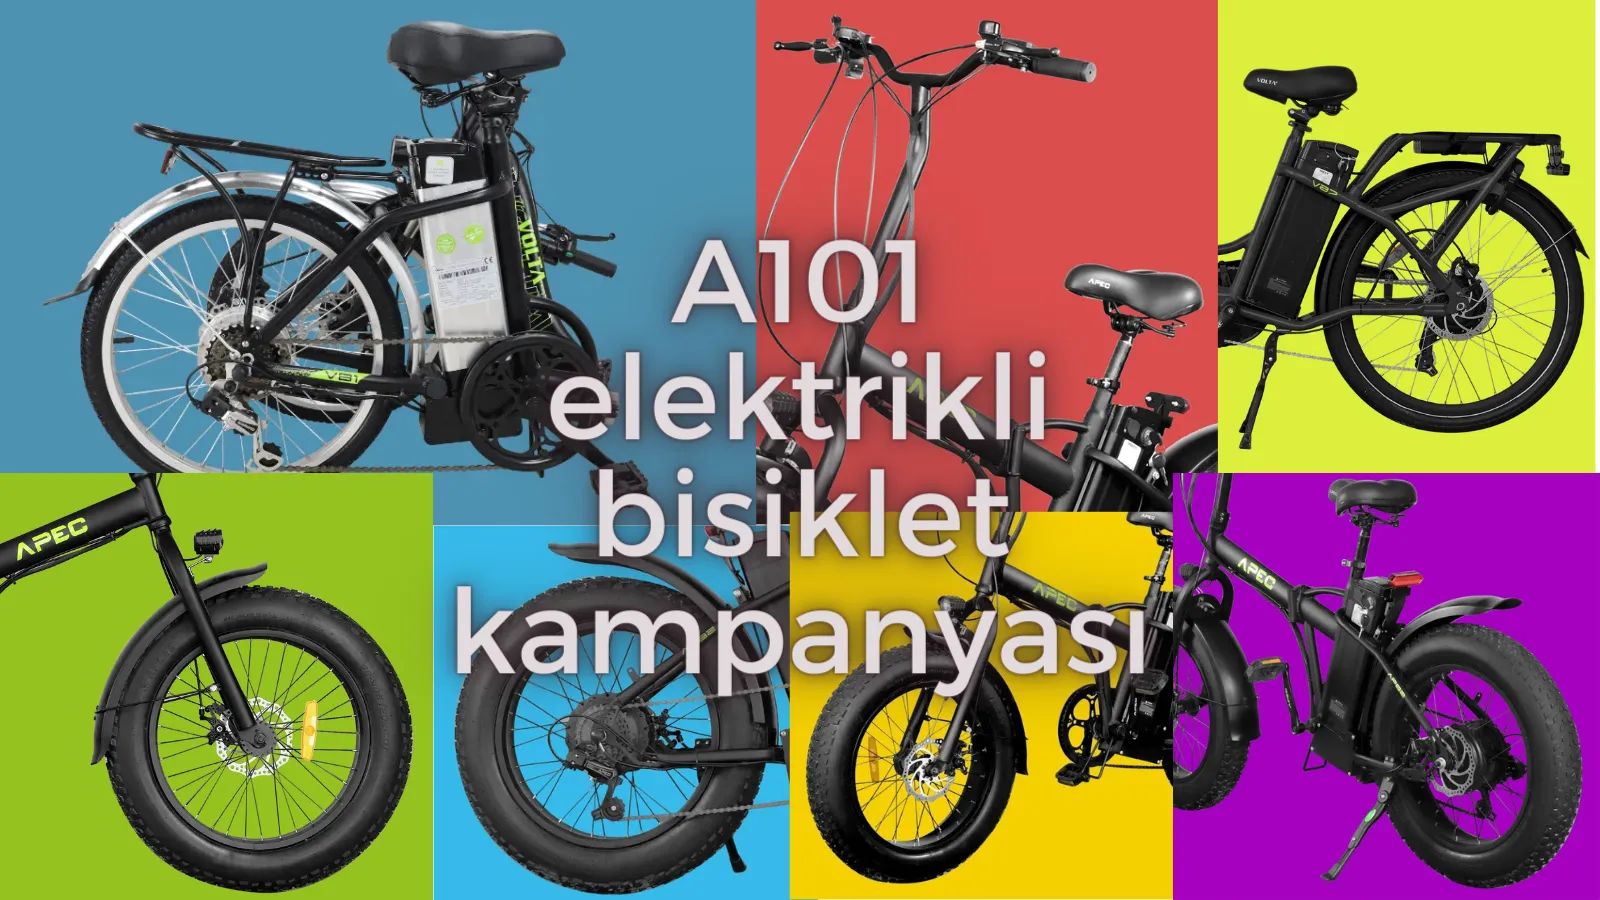 a101 elektrikli bisiklet kampanya kapak görseli